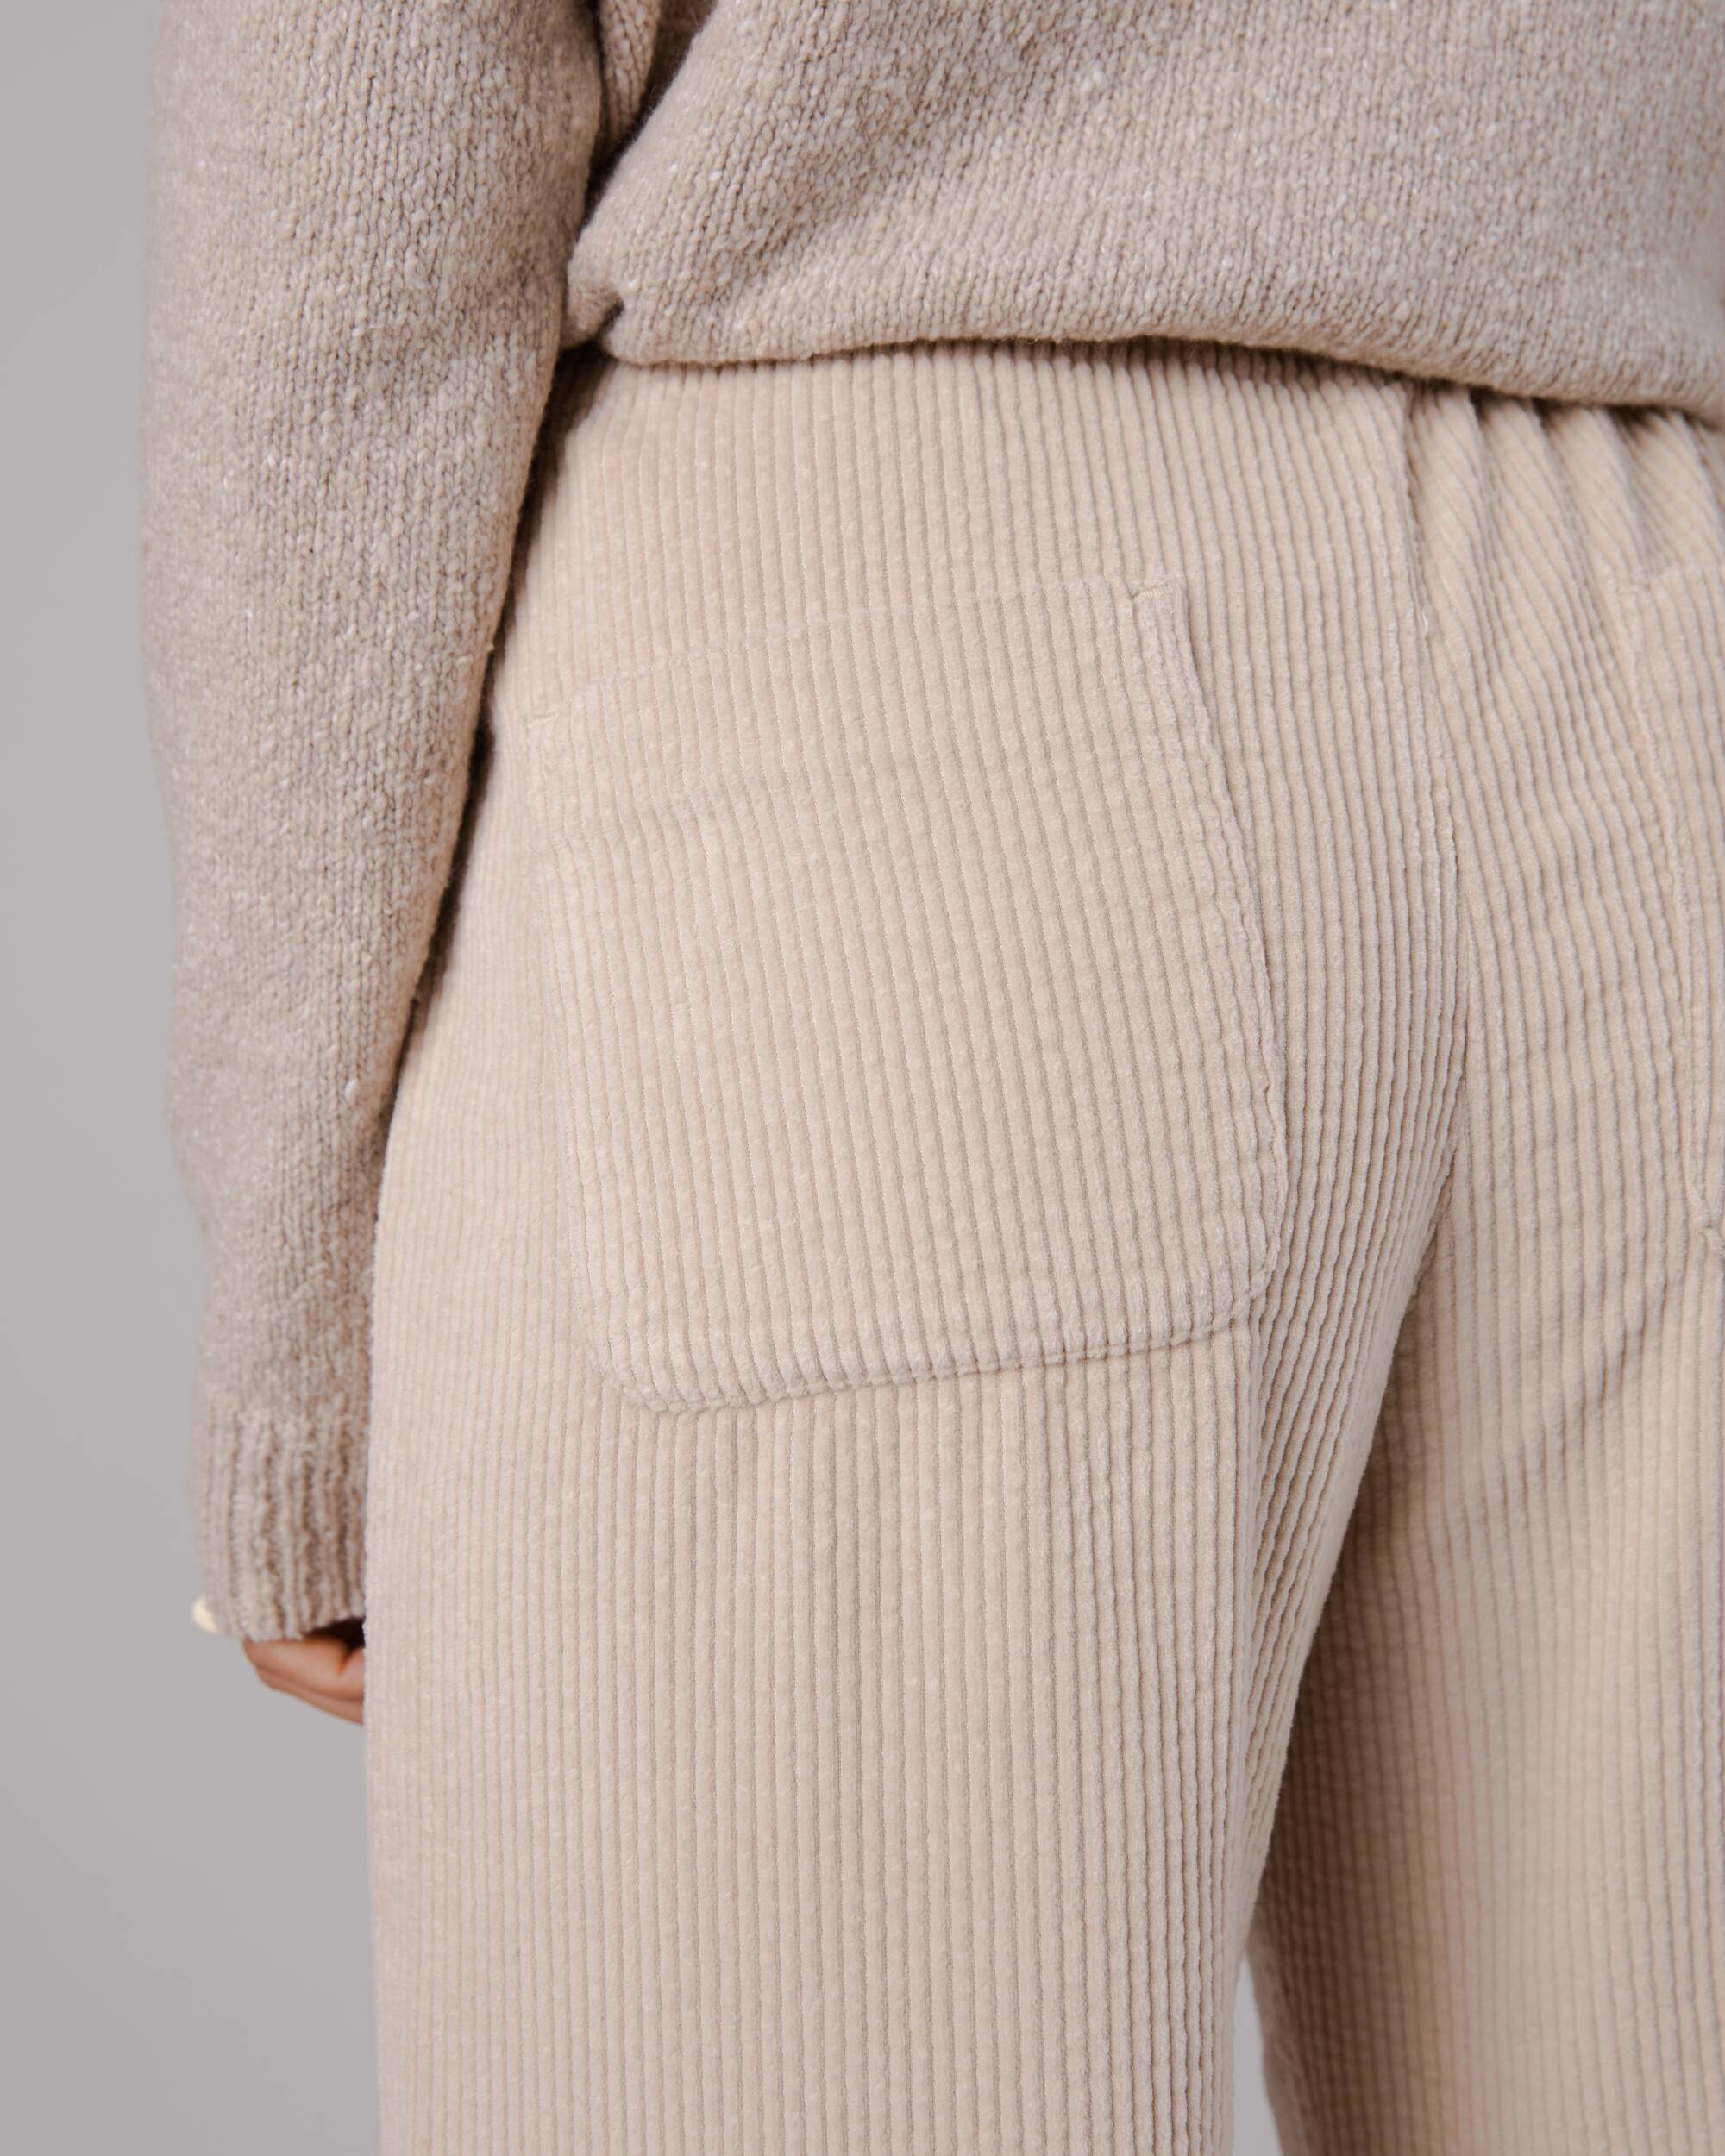 Beige wide corduroy pants made of organic cotton from Brava Fabrics